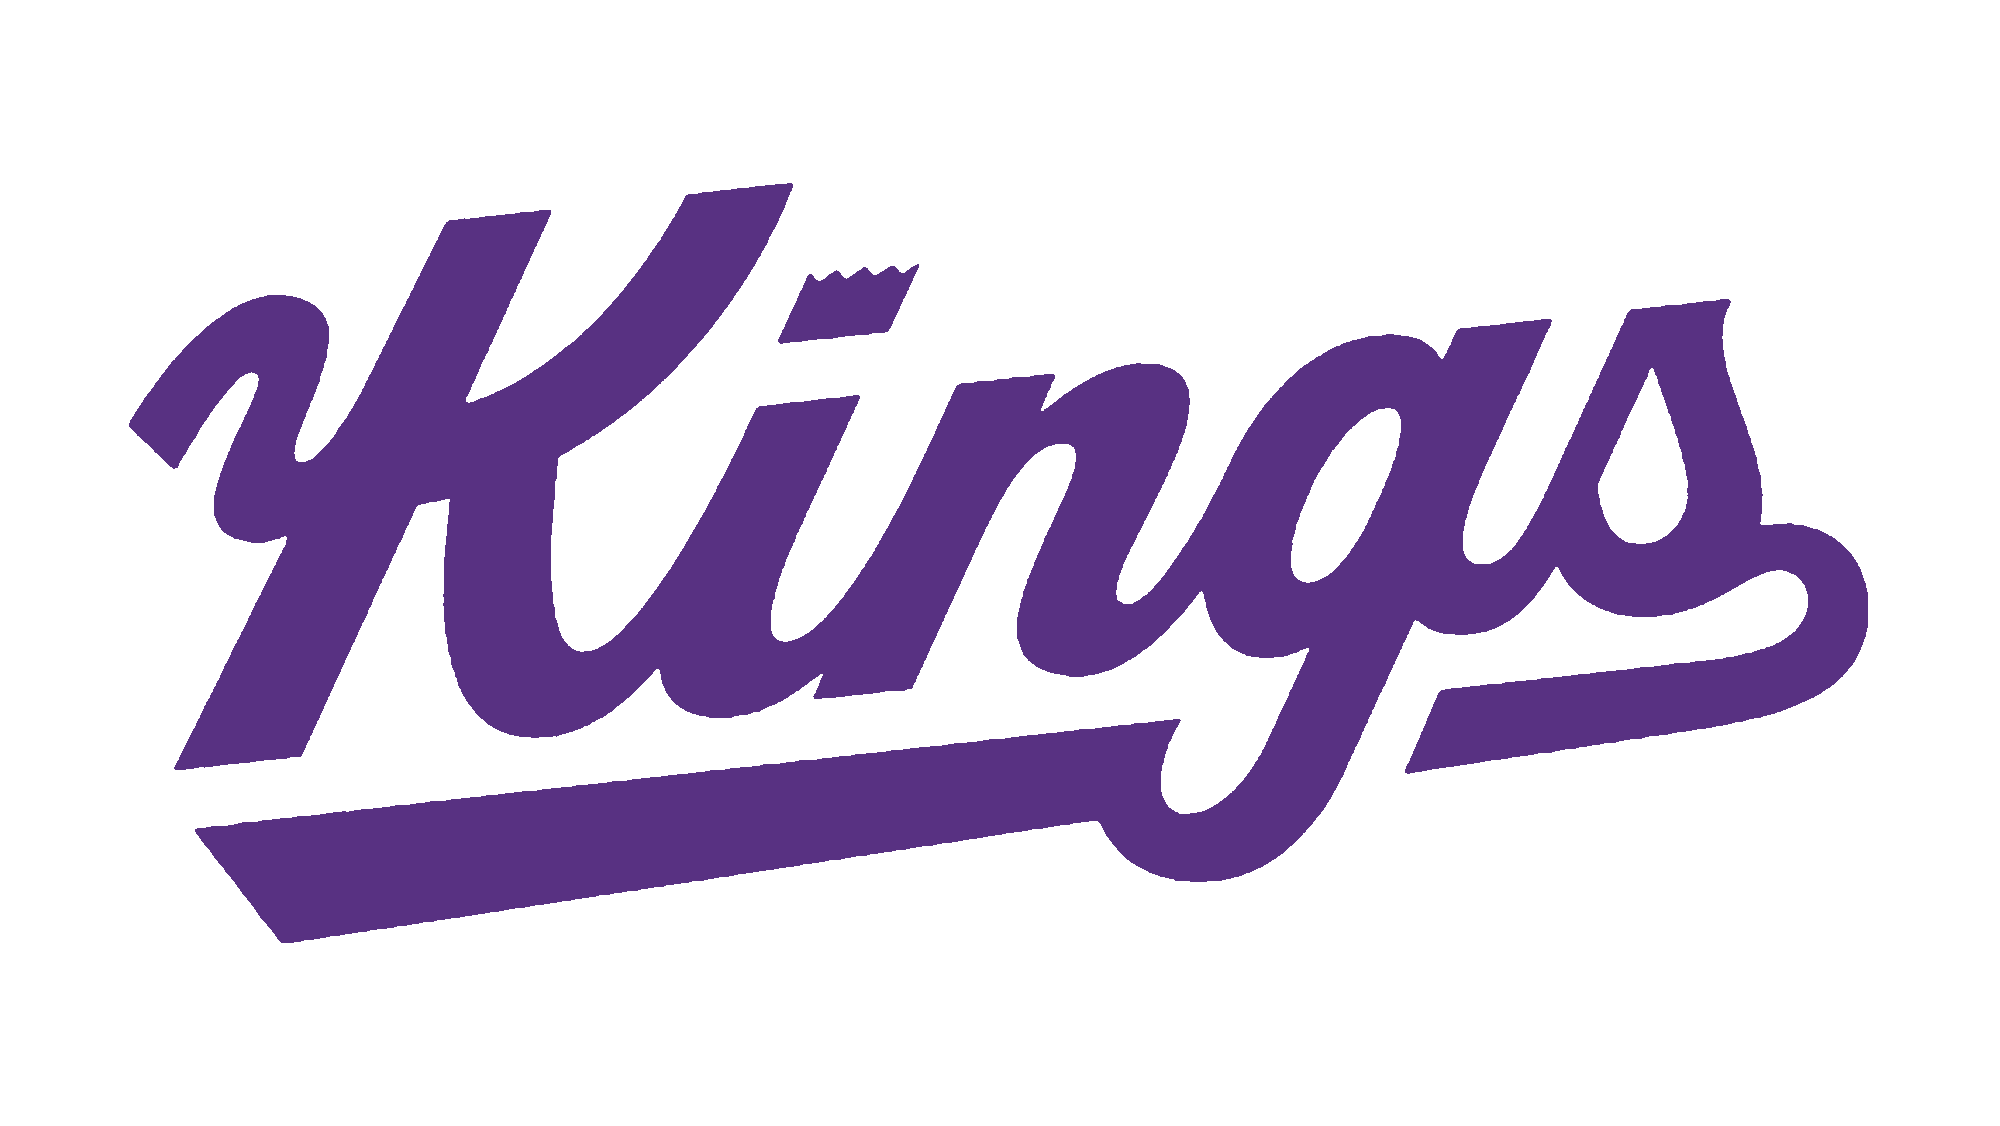 Sacramento Kings Wordmark Logo